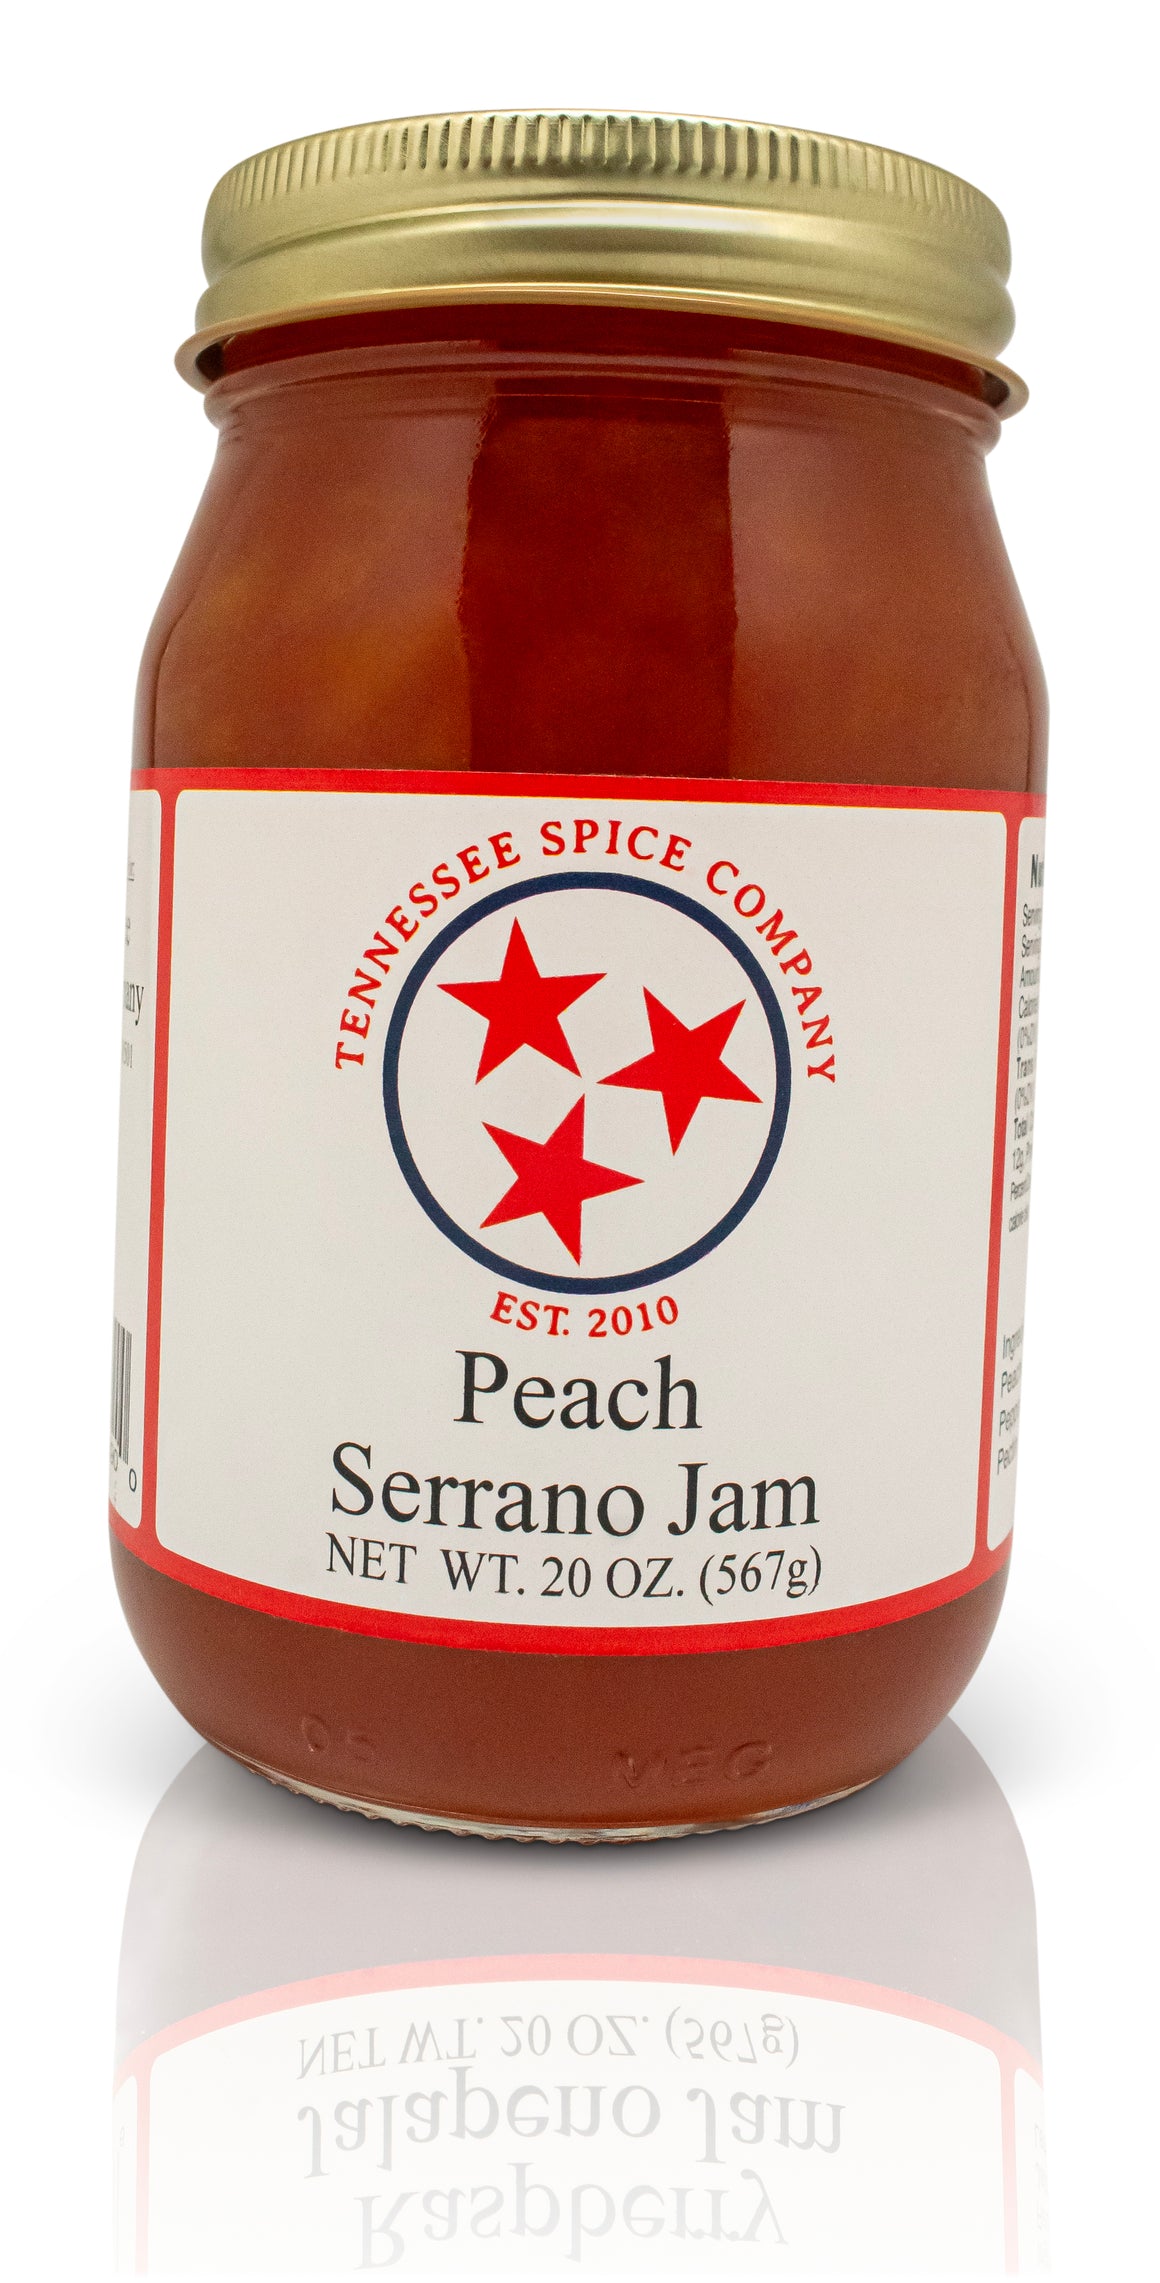 Peach Serrano Jam - TN Spice